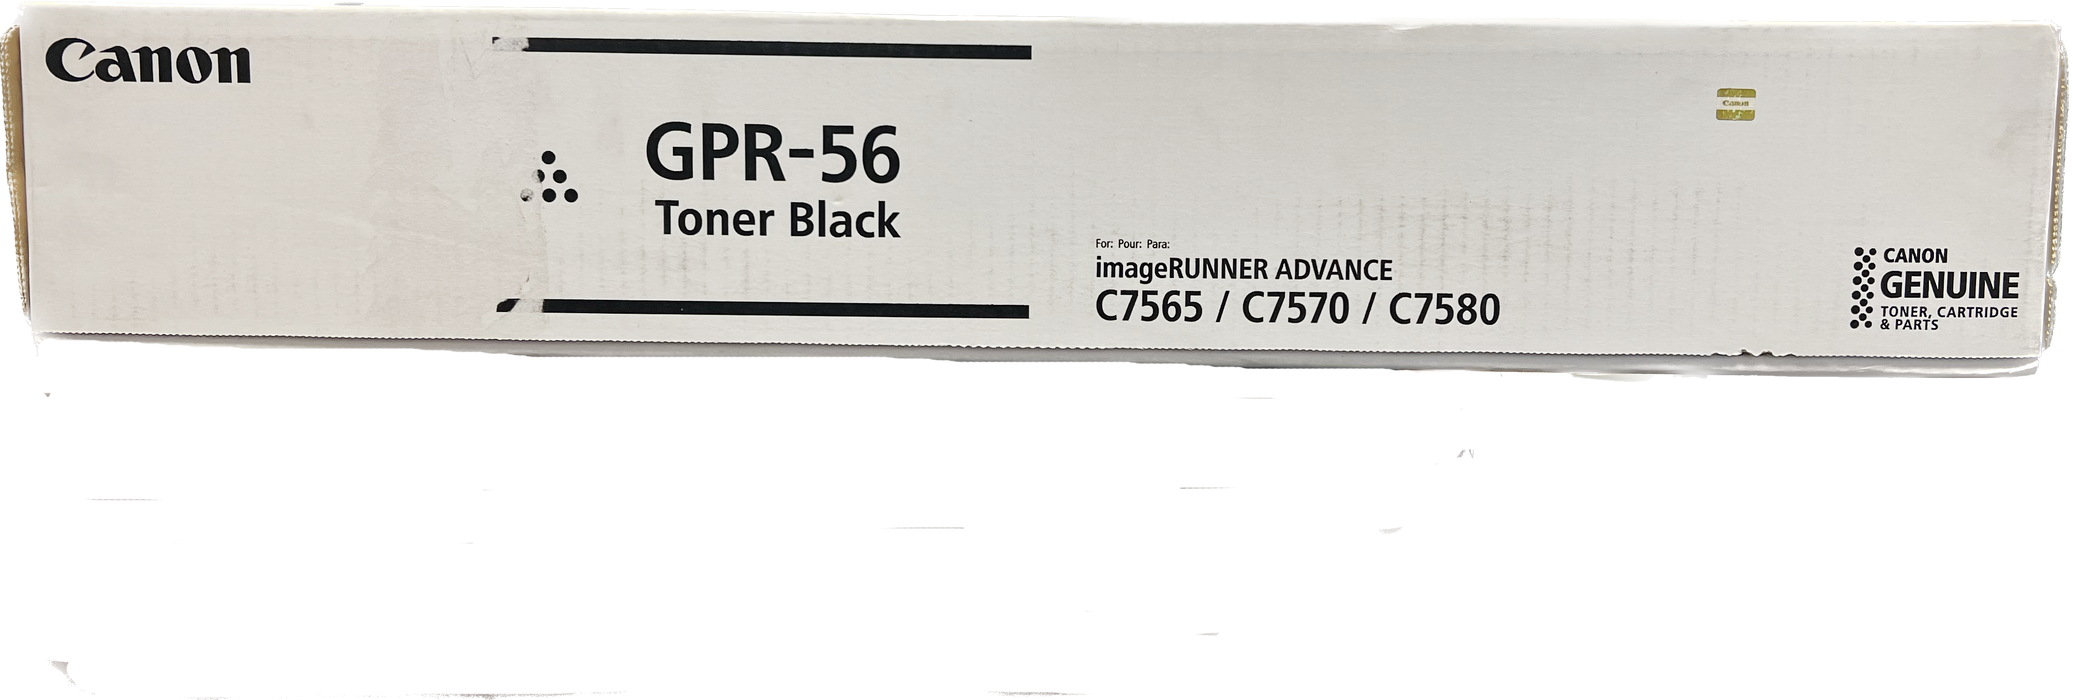 Genuine Canon Black Toner Cartridge | 0998C003 | GPR-56K